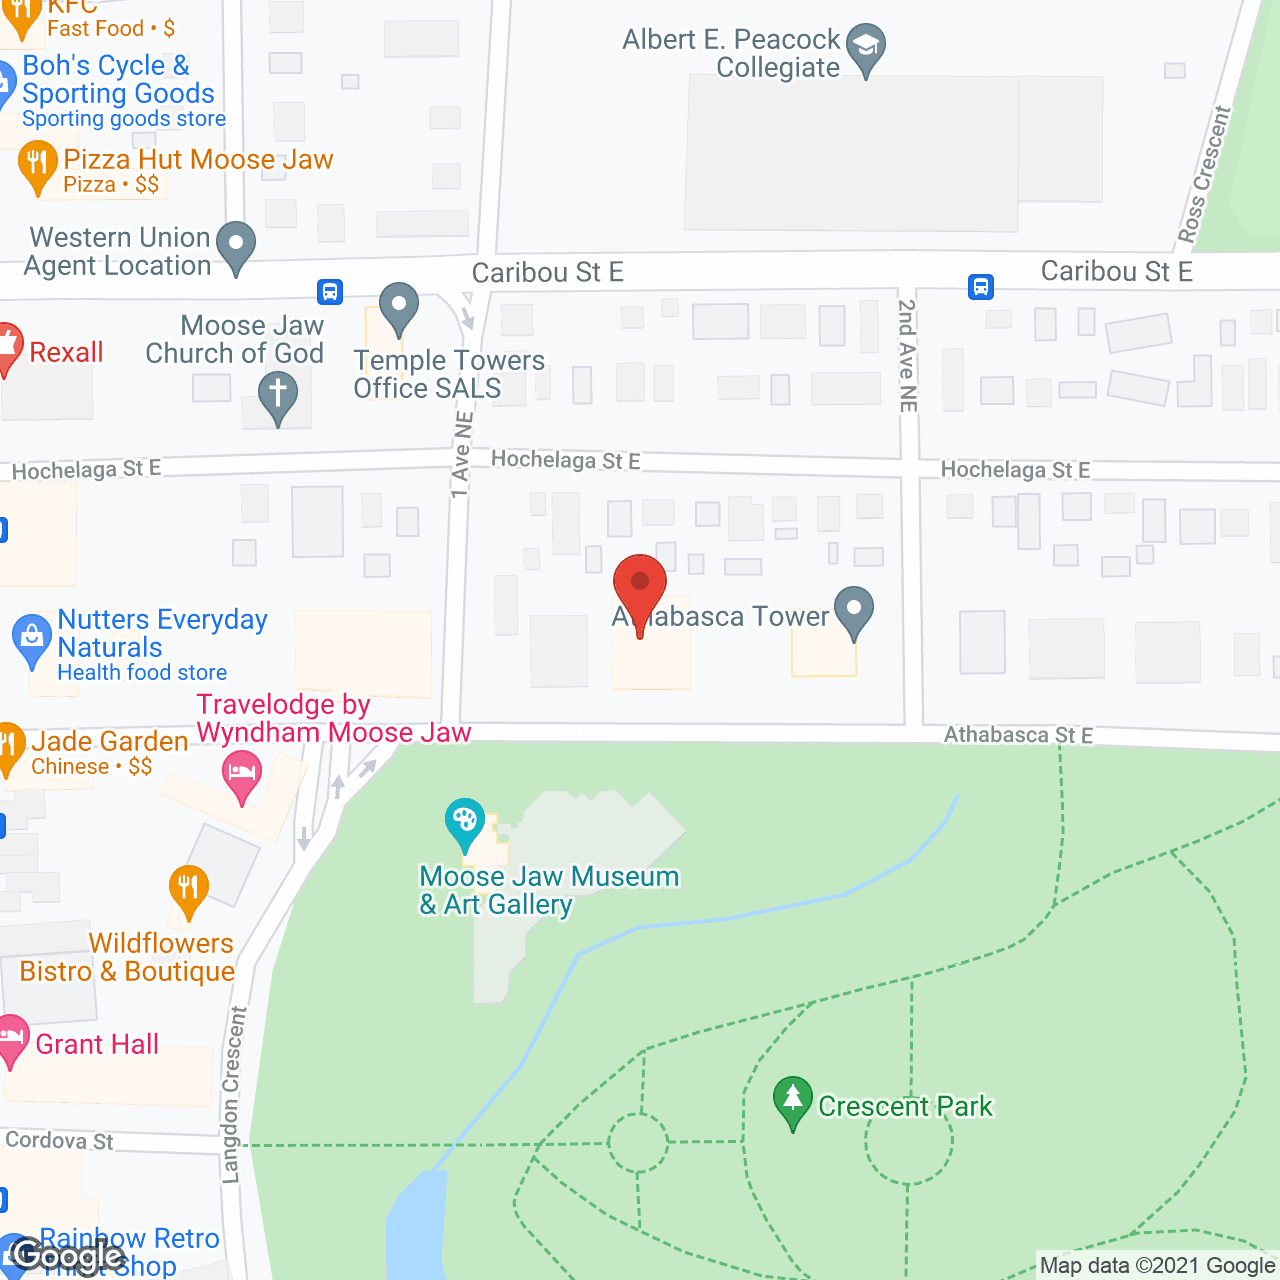 Crescent Park Retirement Villa in google map